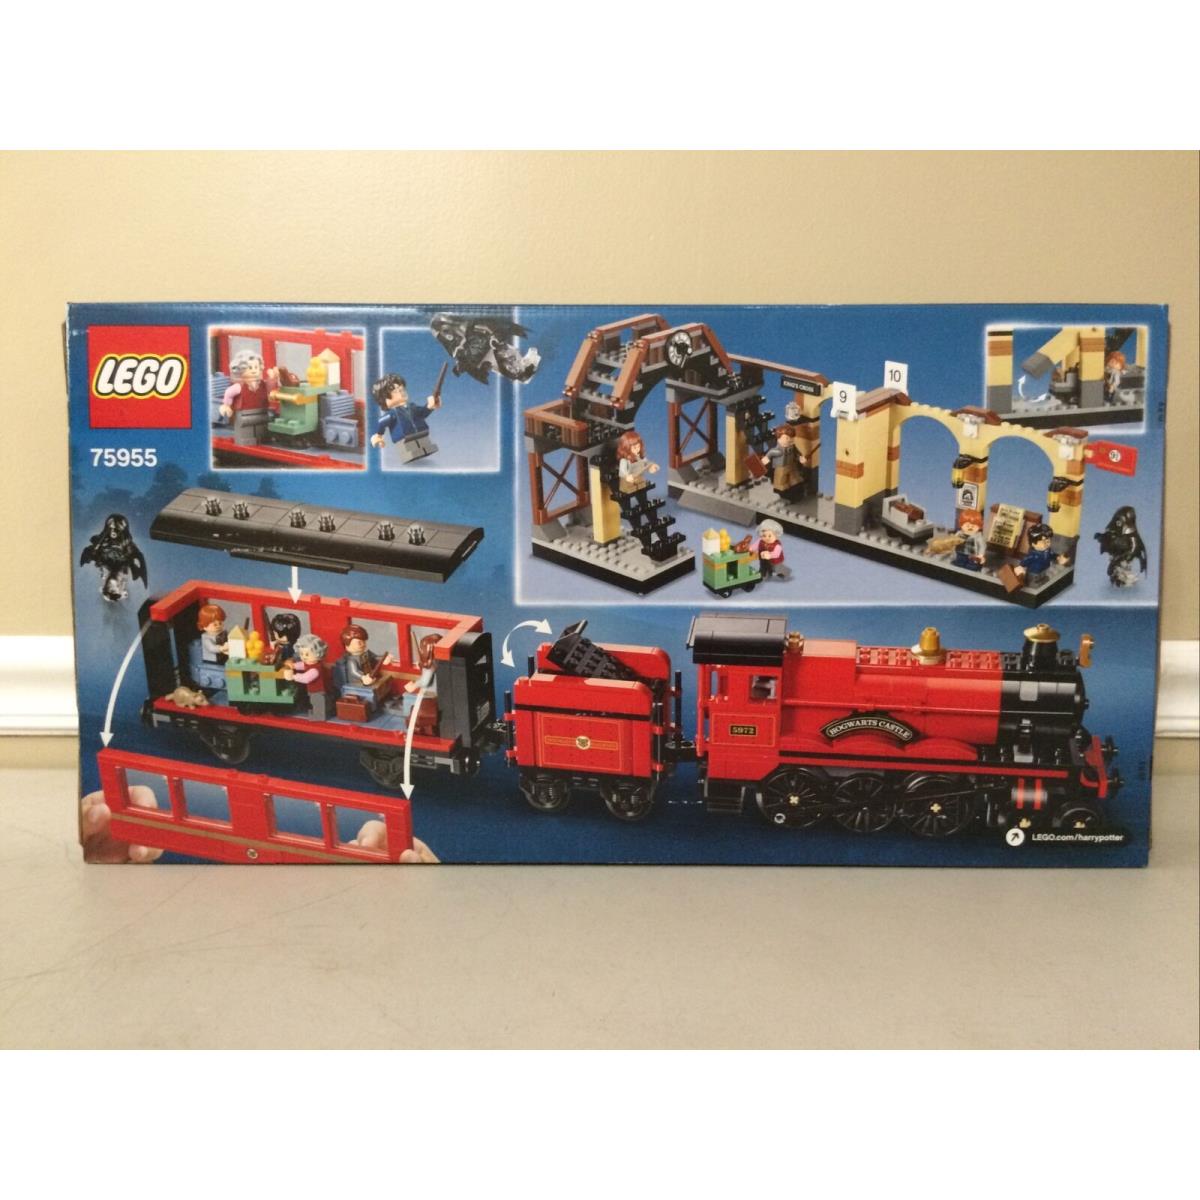 Lego Harry Potter Hogwarts Express 75955 Toy Train Building Set